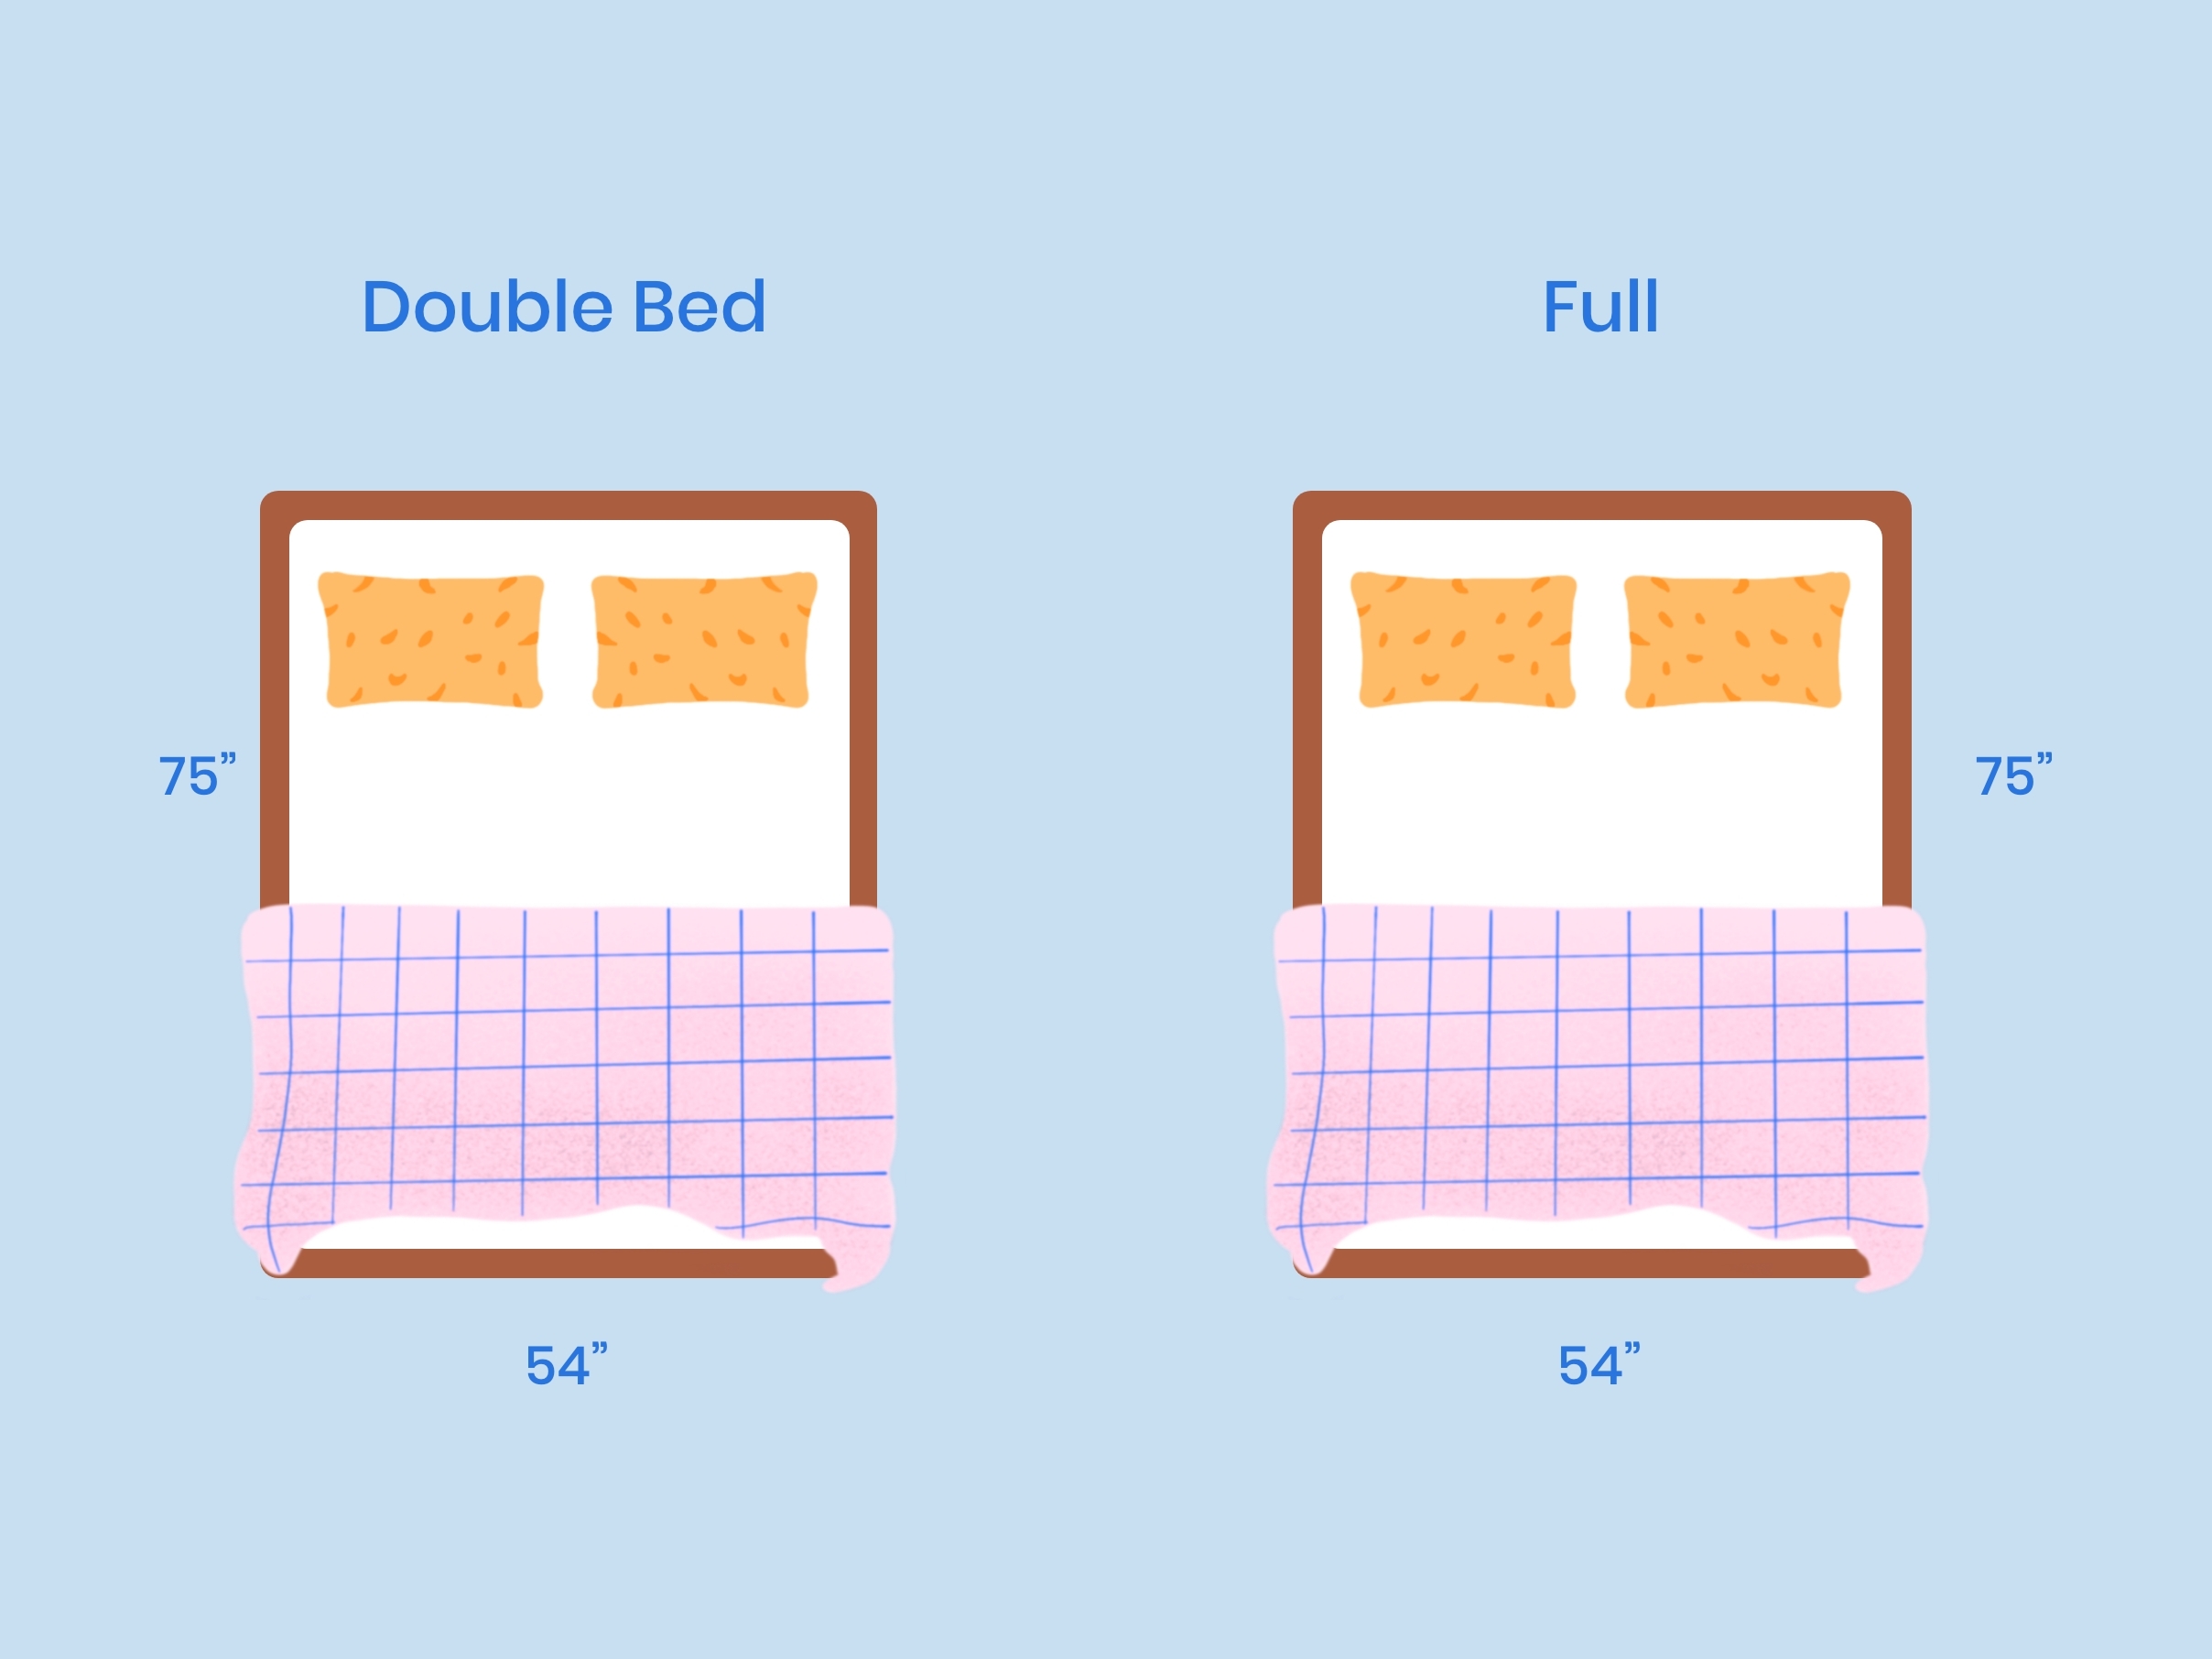 Full Vs Double Bed Mattress Size Comparison Illustration